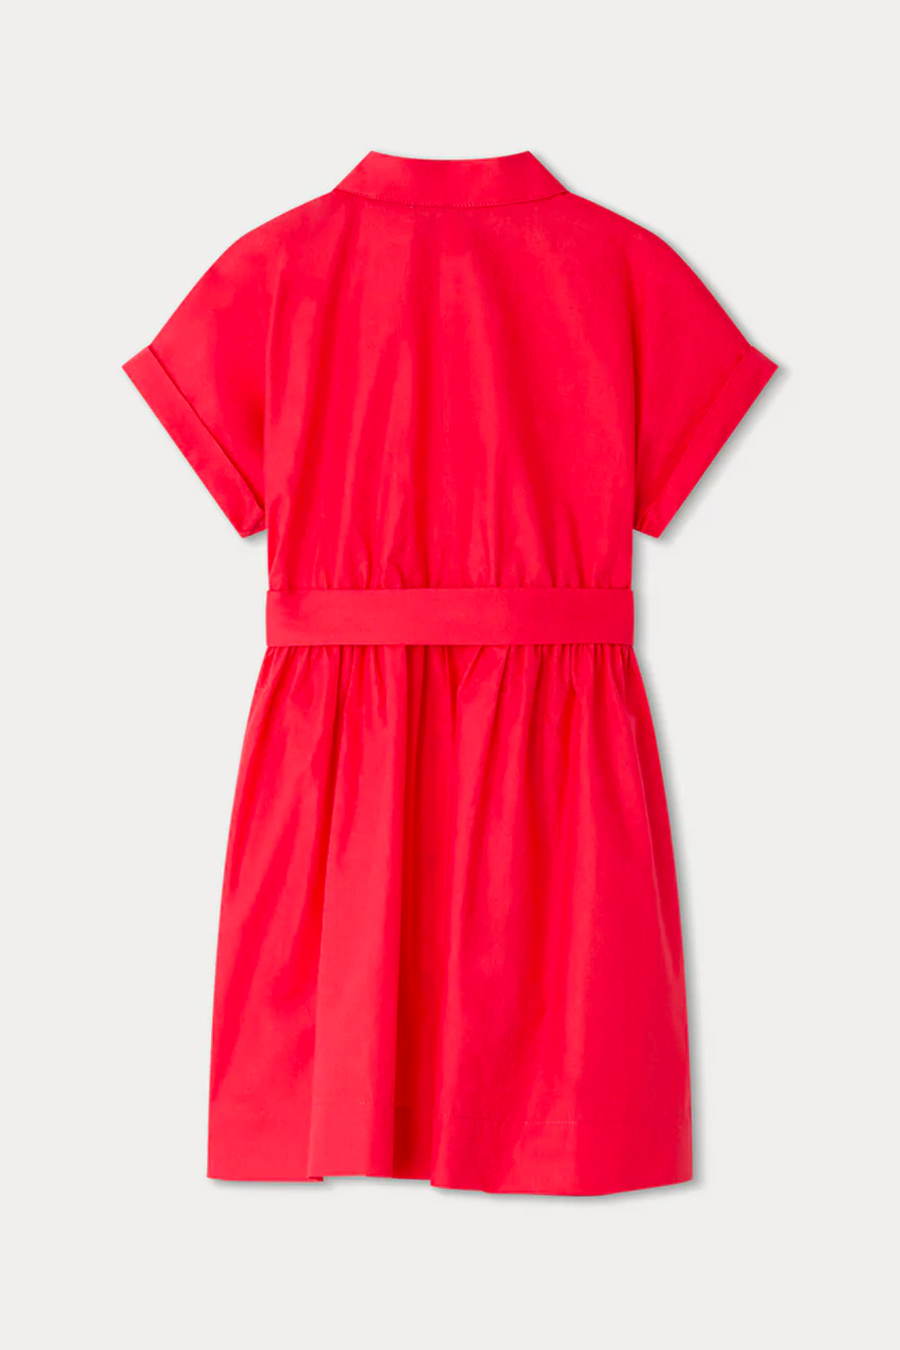 Gisele red dress